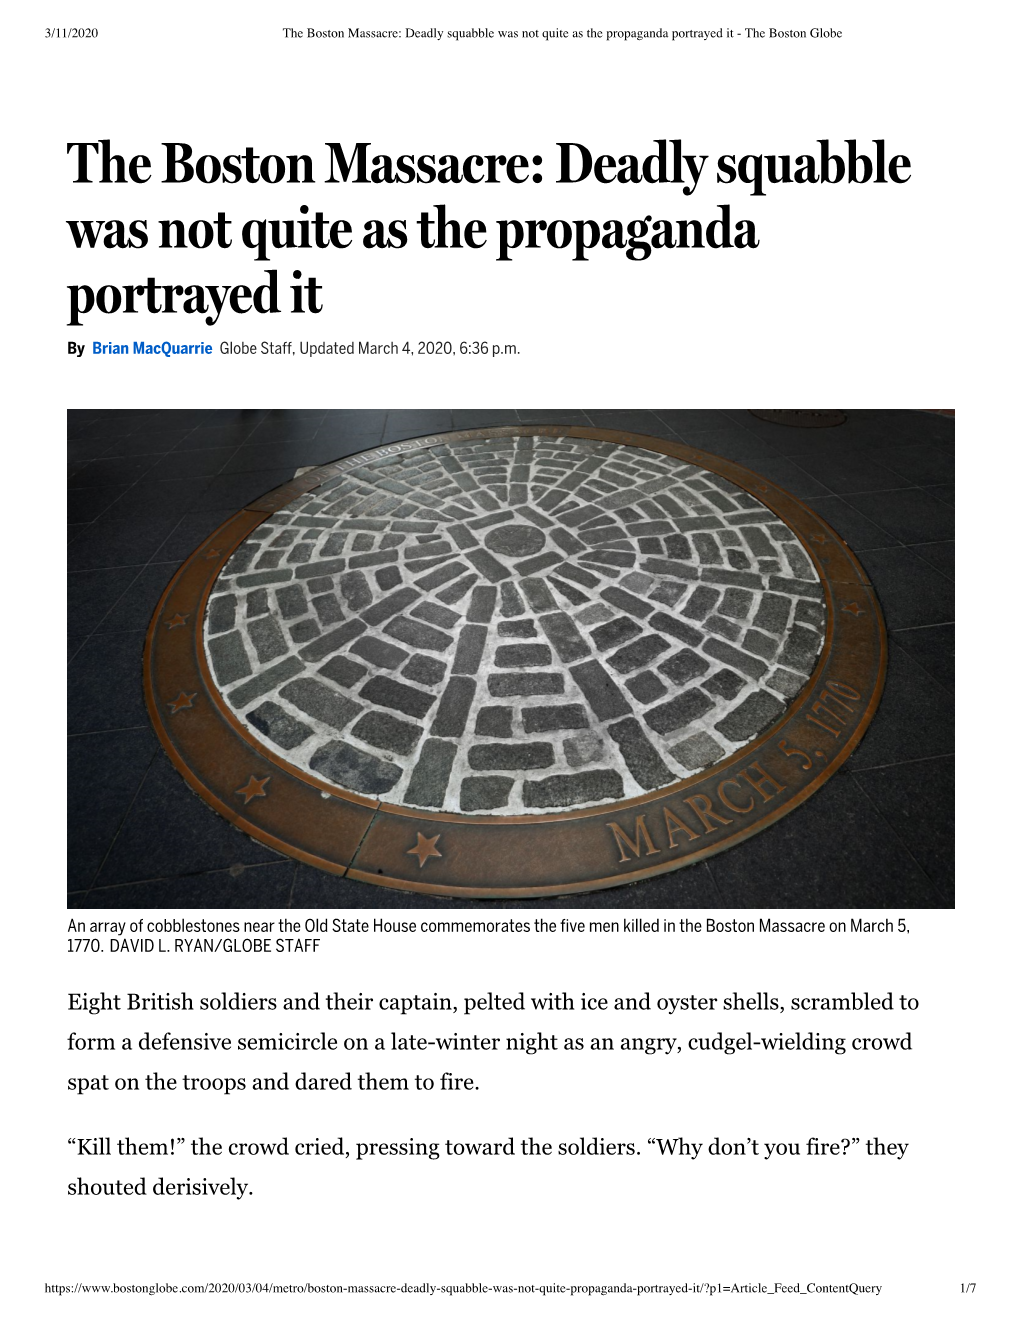 The Boston Massacre: Deadly Squabble Was Not Quite As the Propaganda Portrayed It - the Boston Globe